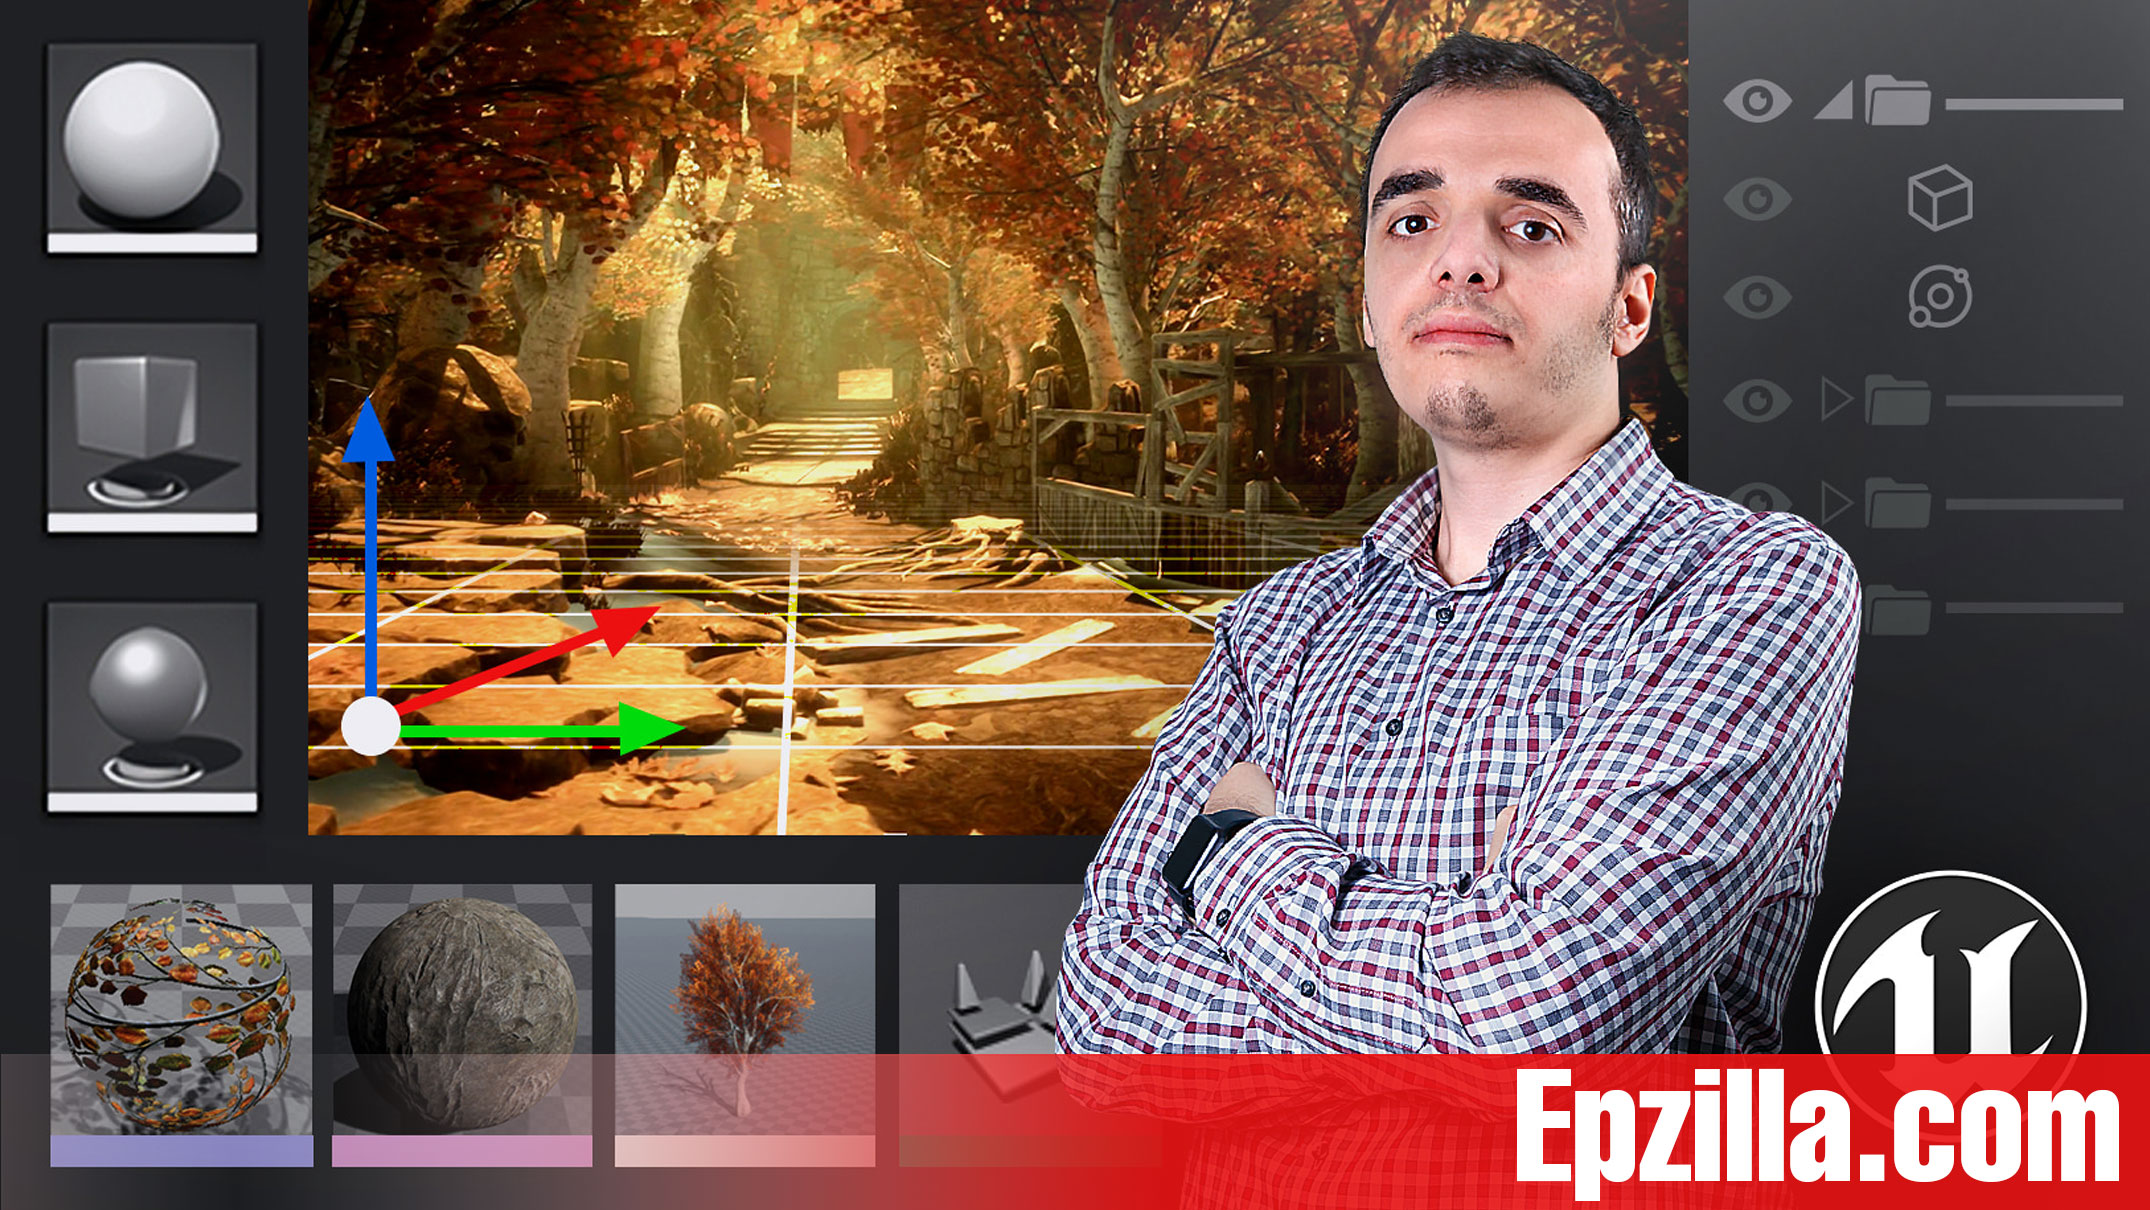 Domestika Introduction to Unreal Engine 4 for Scene Design by Guillermo Moreno Free Download Epzilla.com